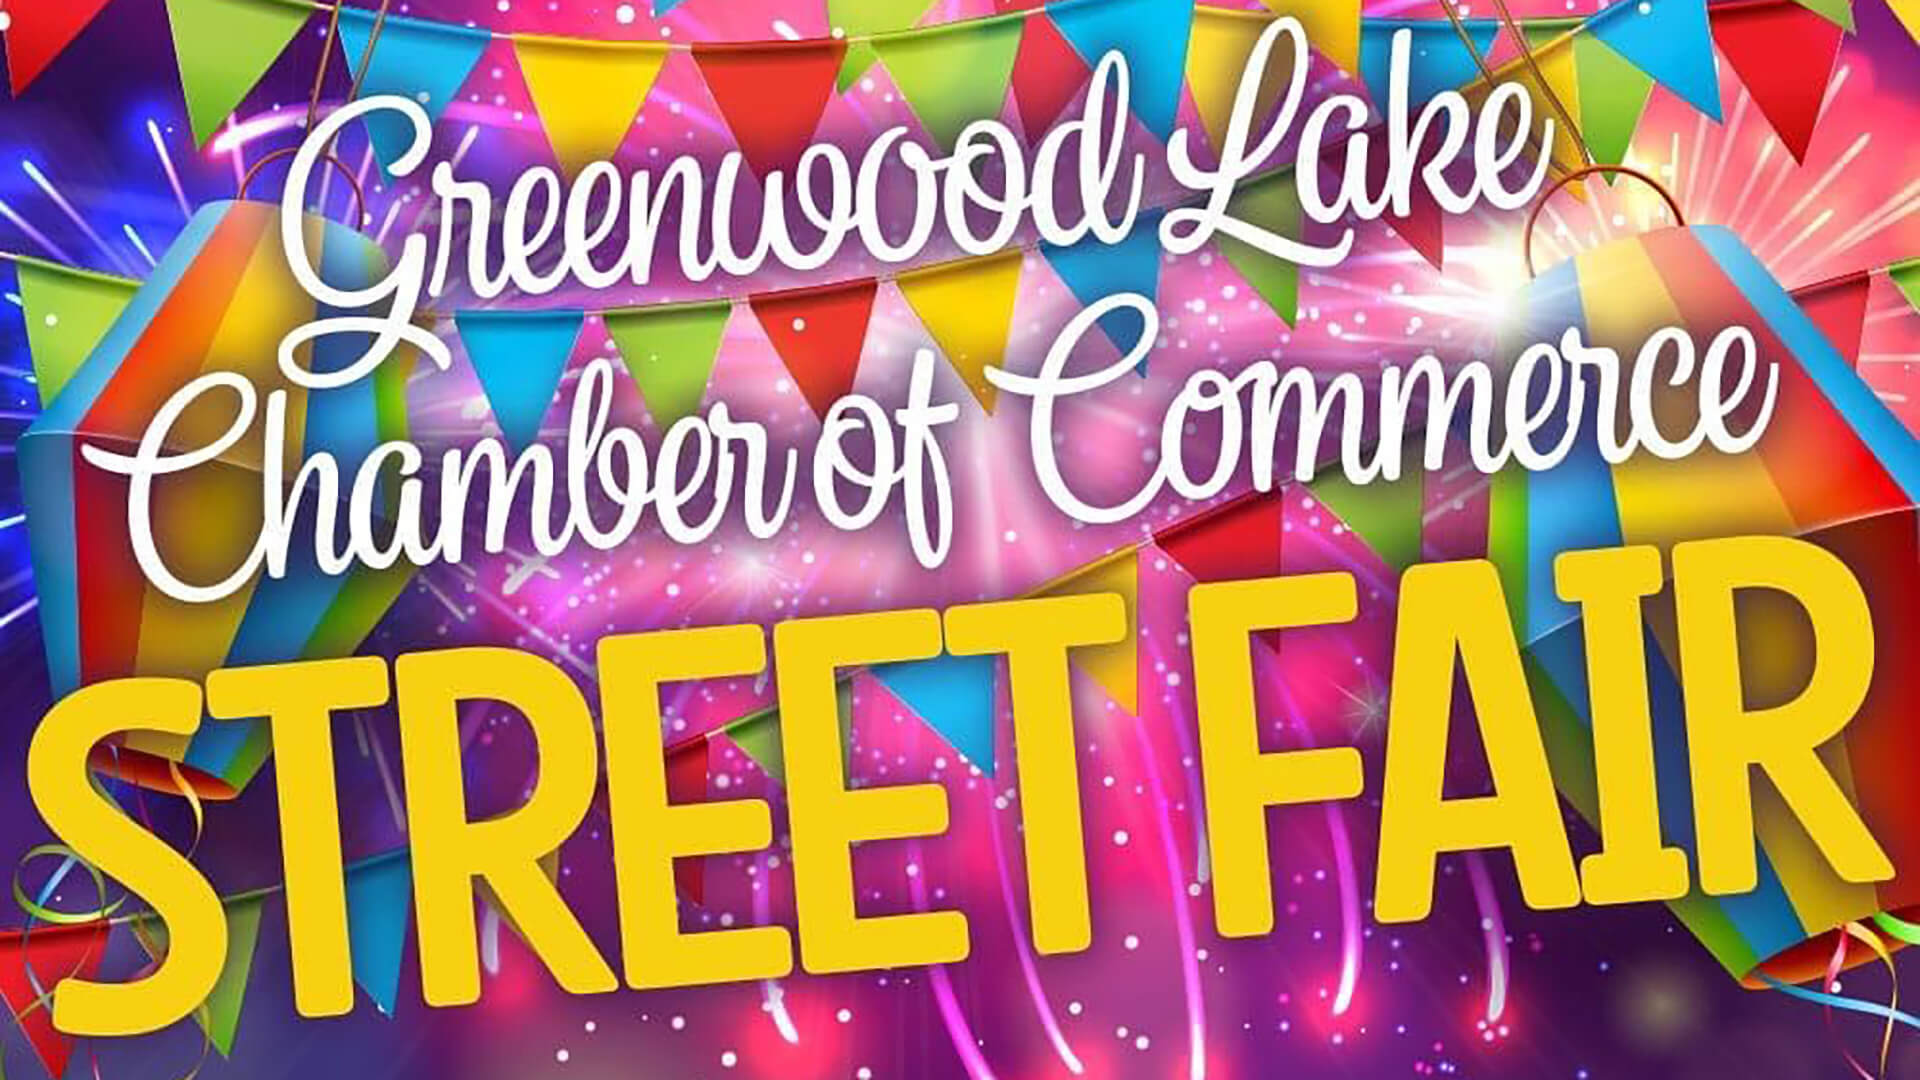 Greenwood Lake Chamber of Commerce Street Fair